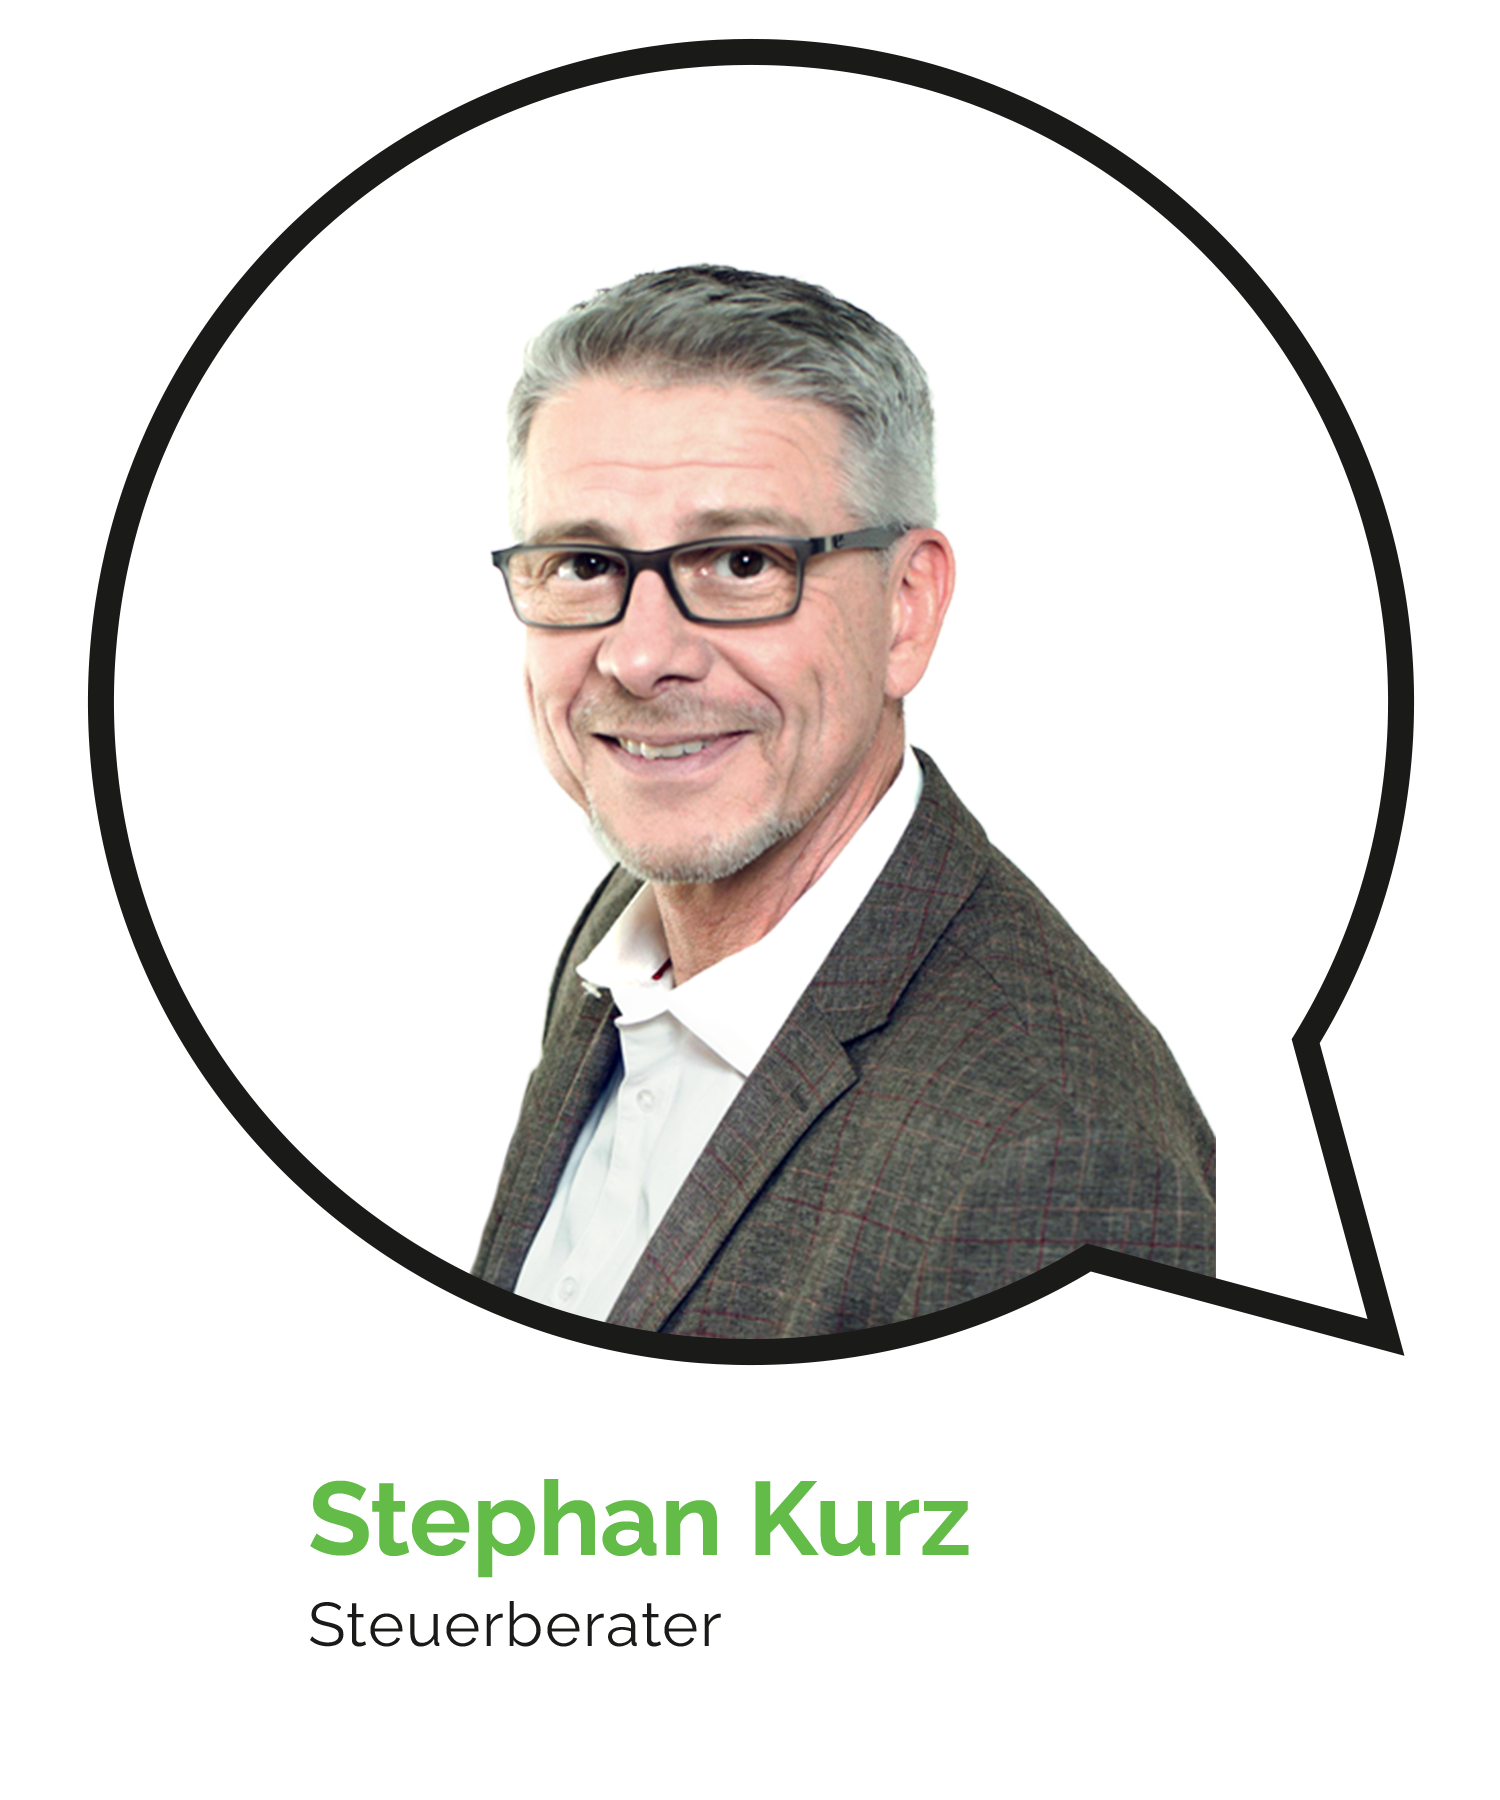 Stephan Kurz